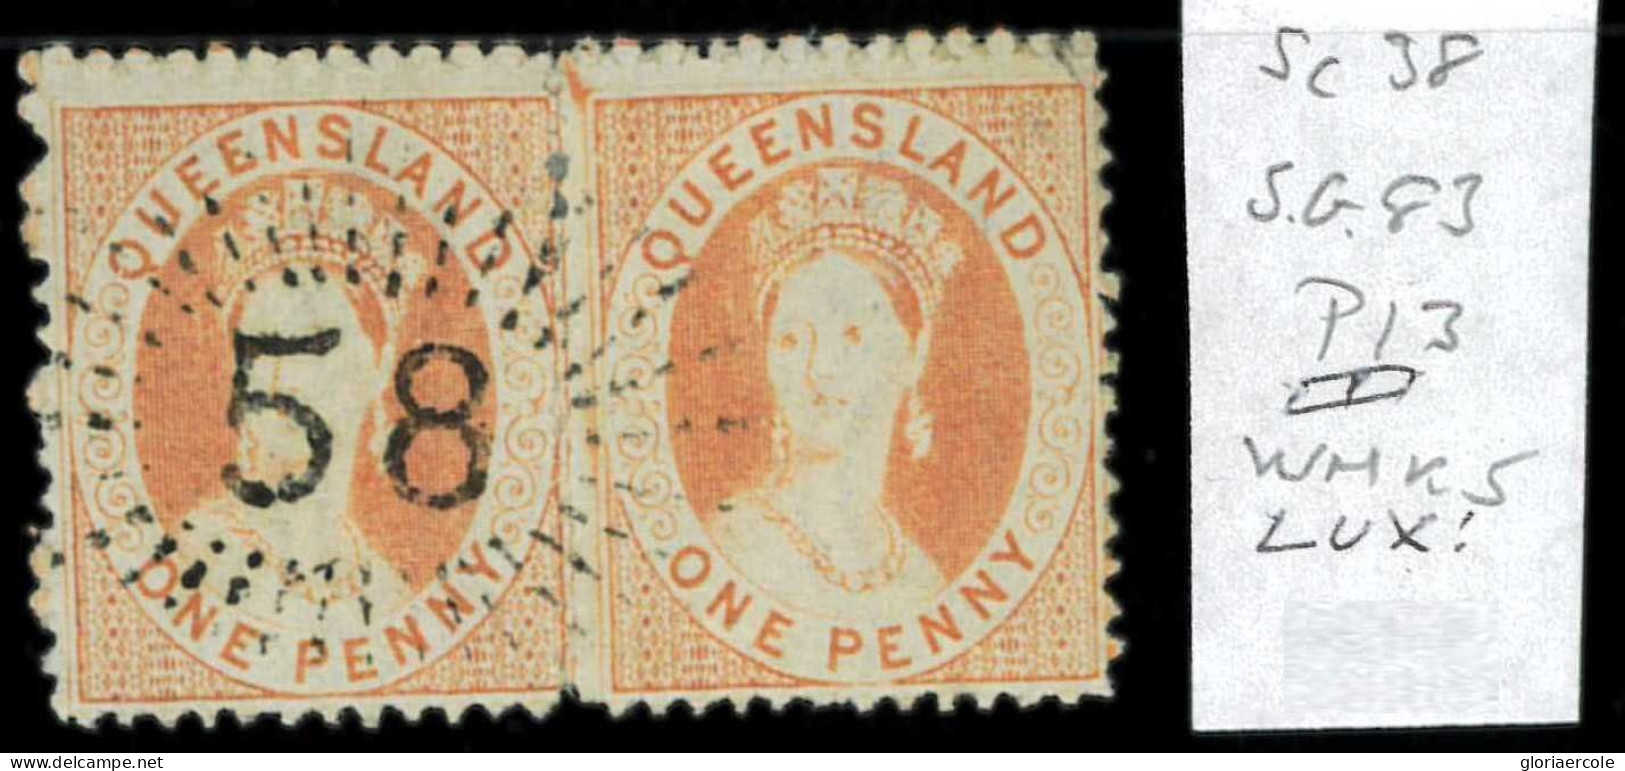 Aa5619m - Australia QUEENSLAND - STAMP - SG #83 Pair - Numeral Postmark # 58 - Gebruikt